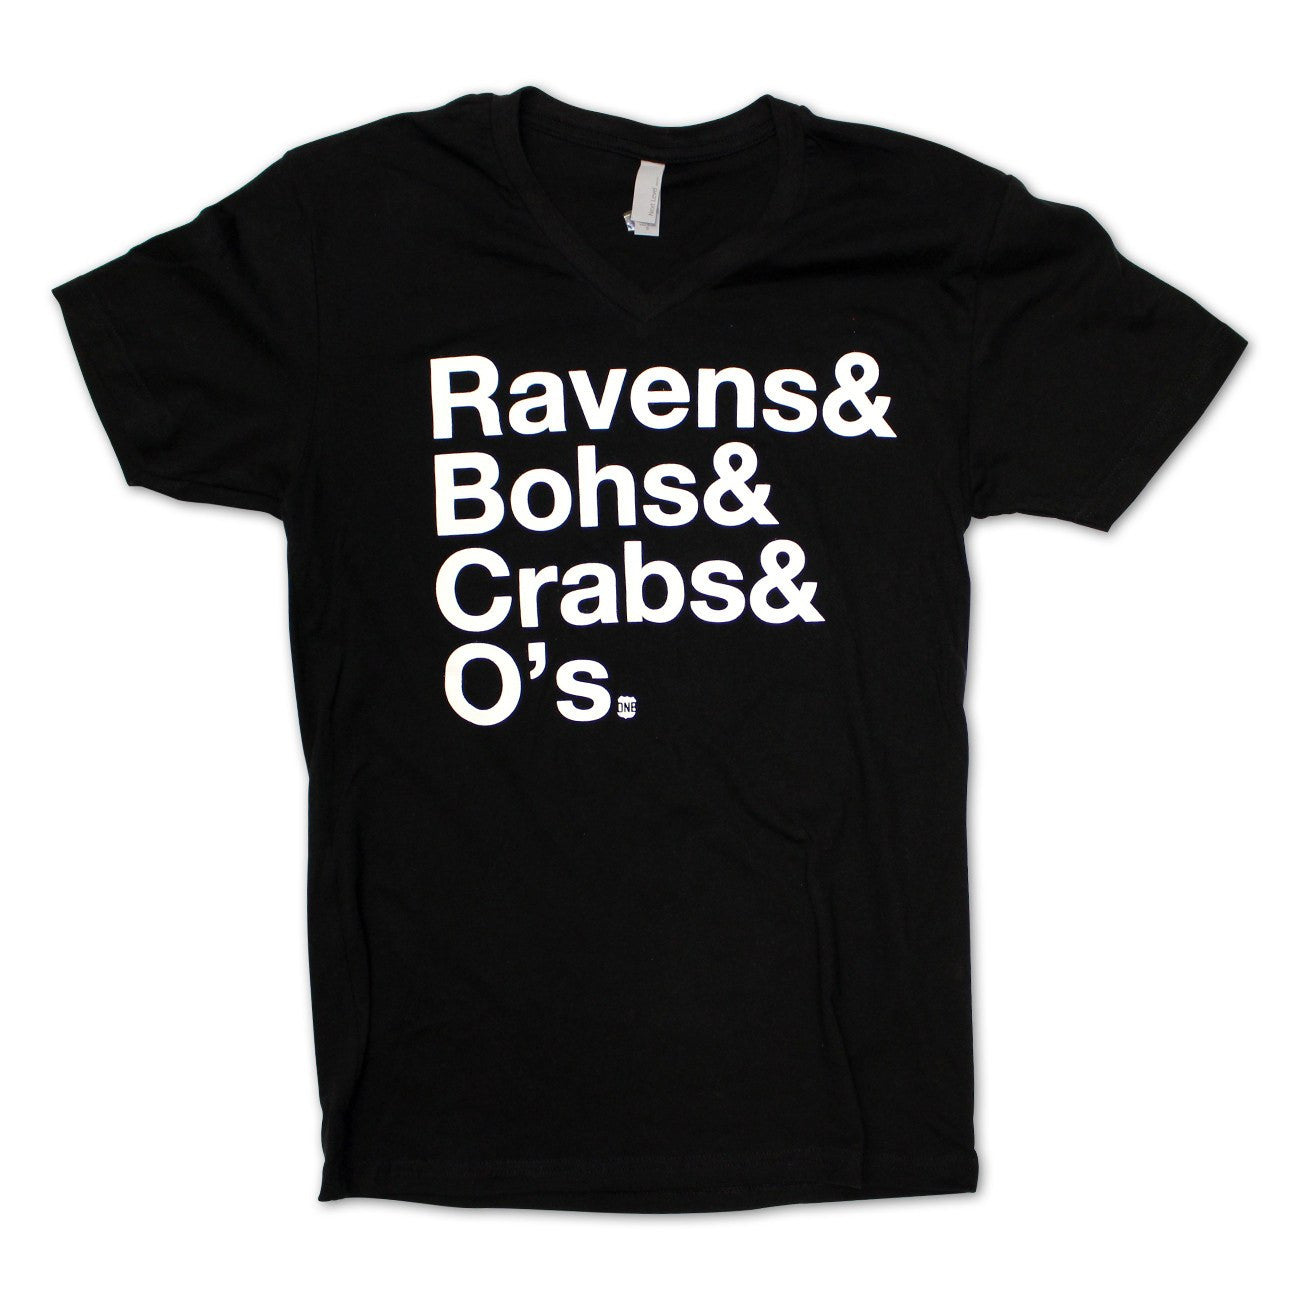 Ravens & Bohs & Crabs & O's Helvetica (Black) / Shirt - Route One Apparel